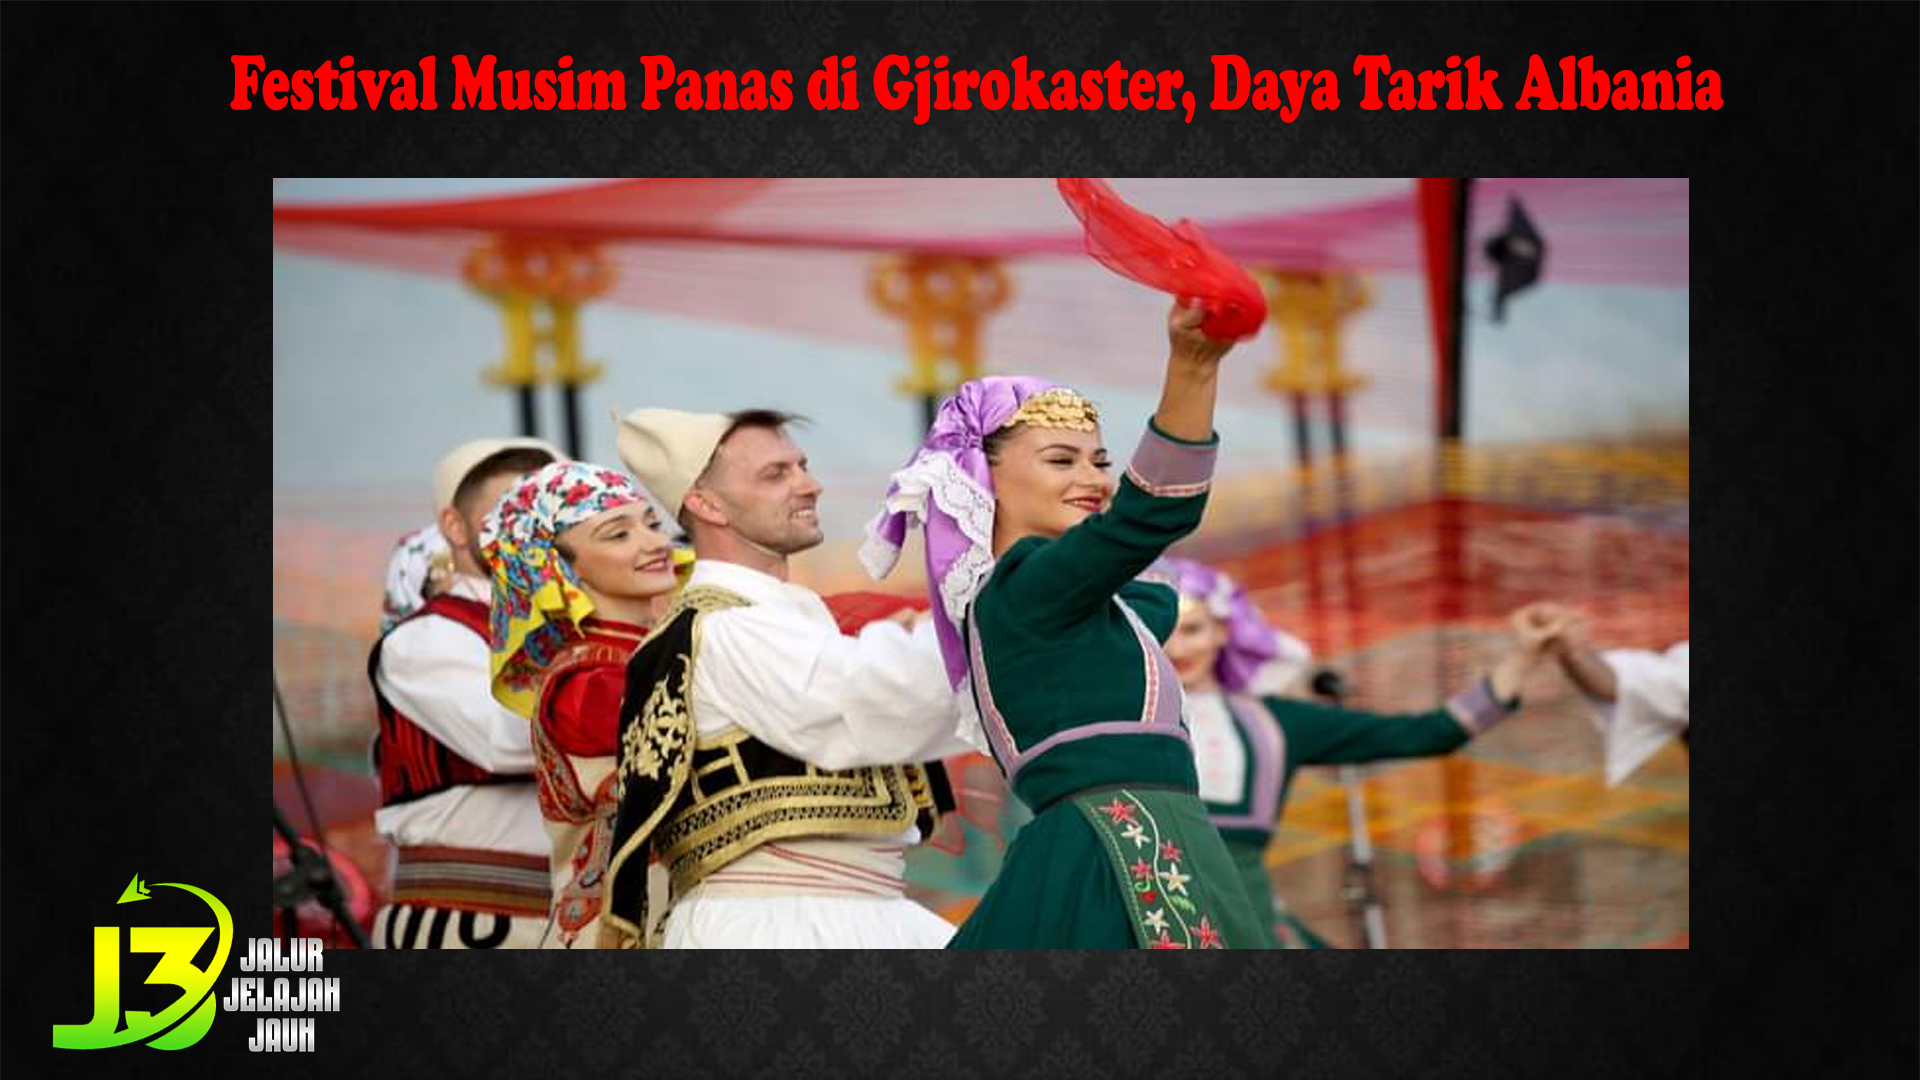 Festival Musim Panas di Gjirokaster, Daya Tarik Albania